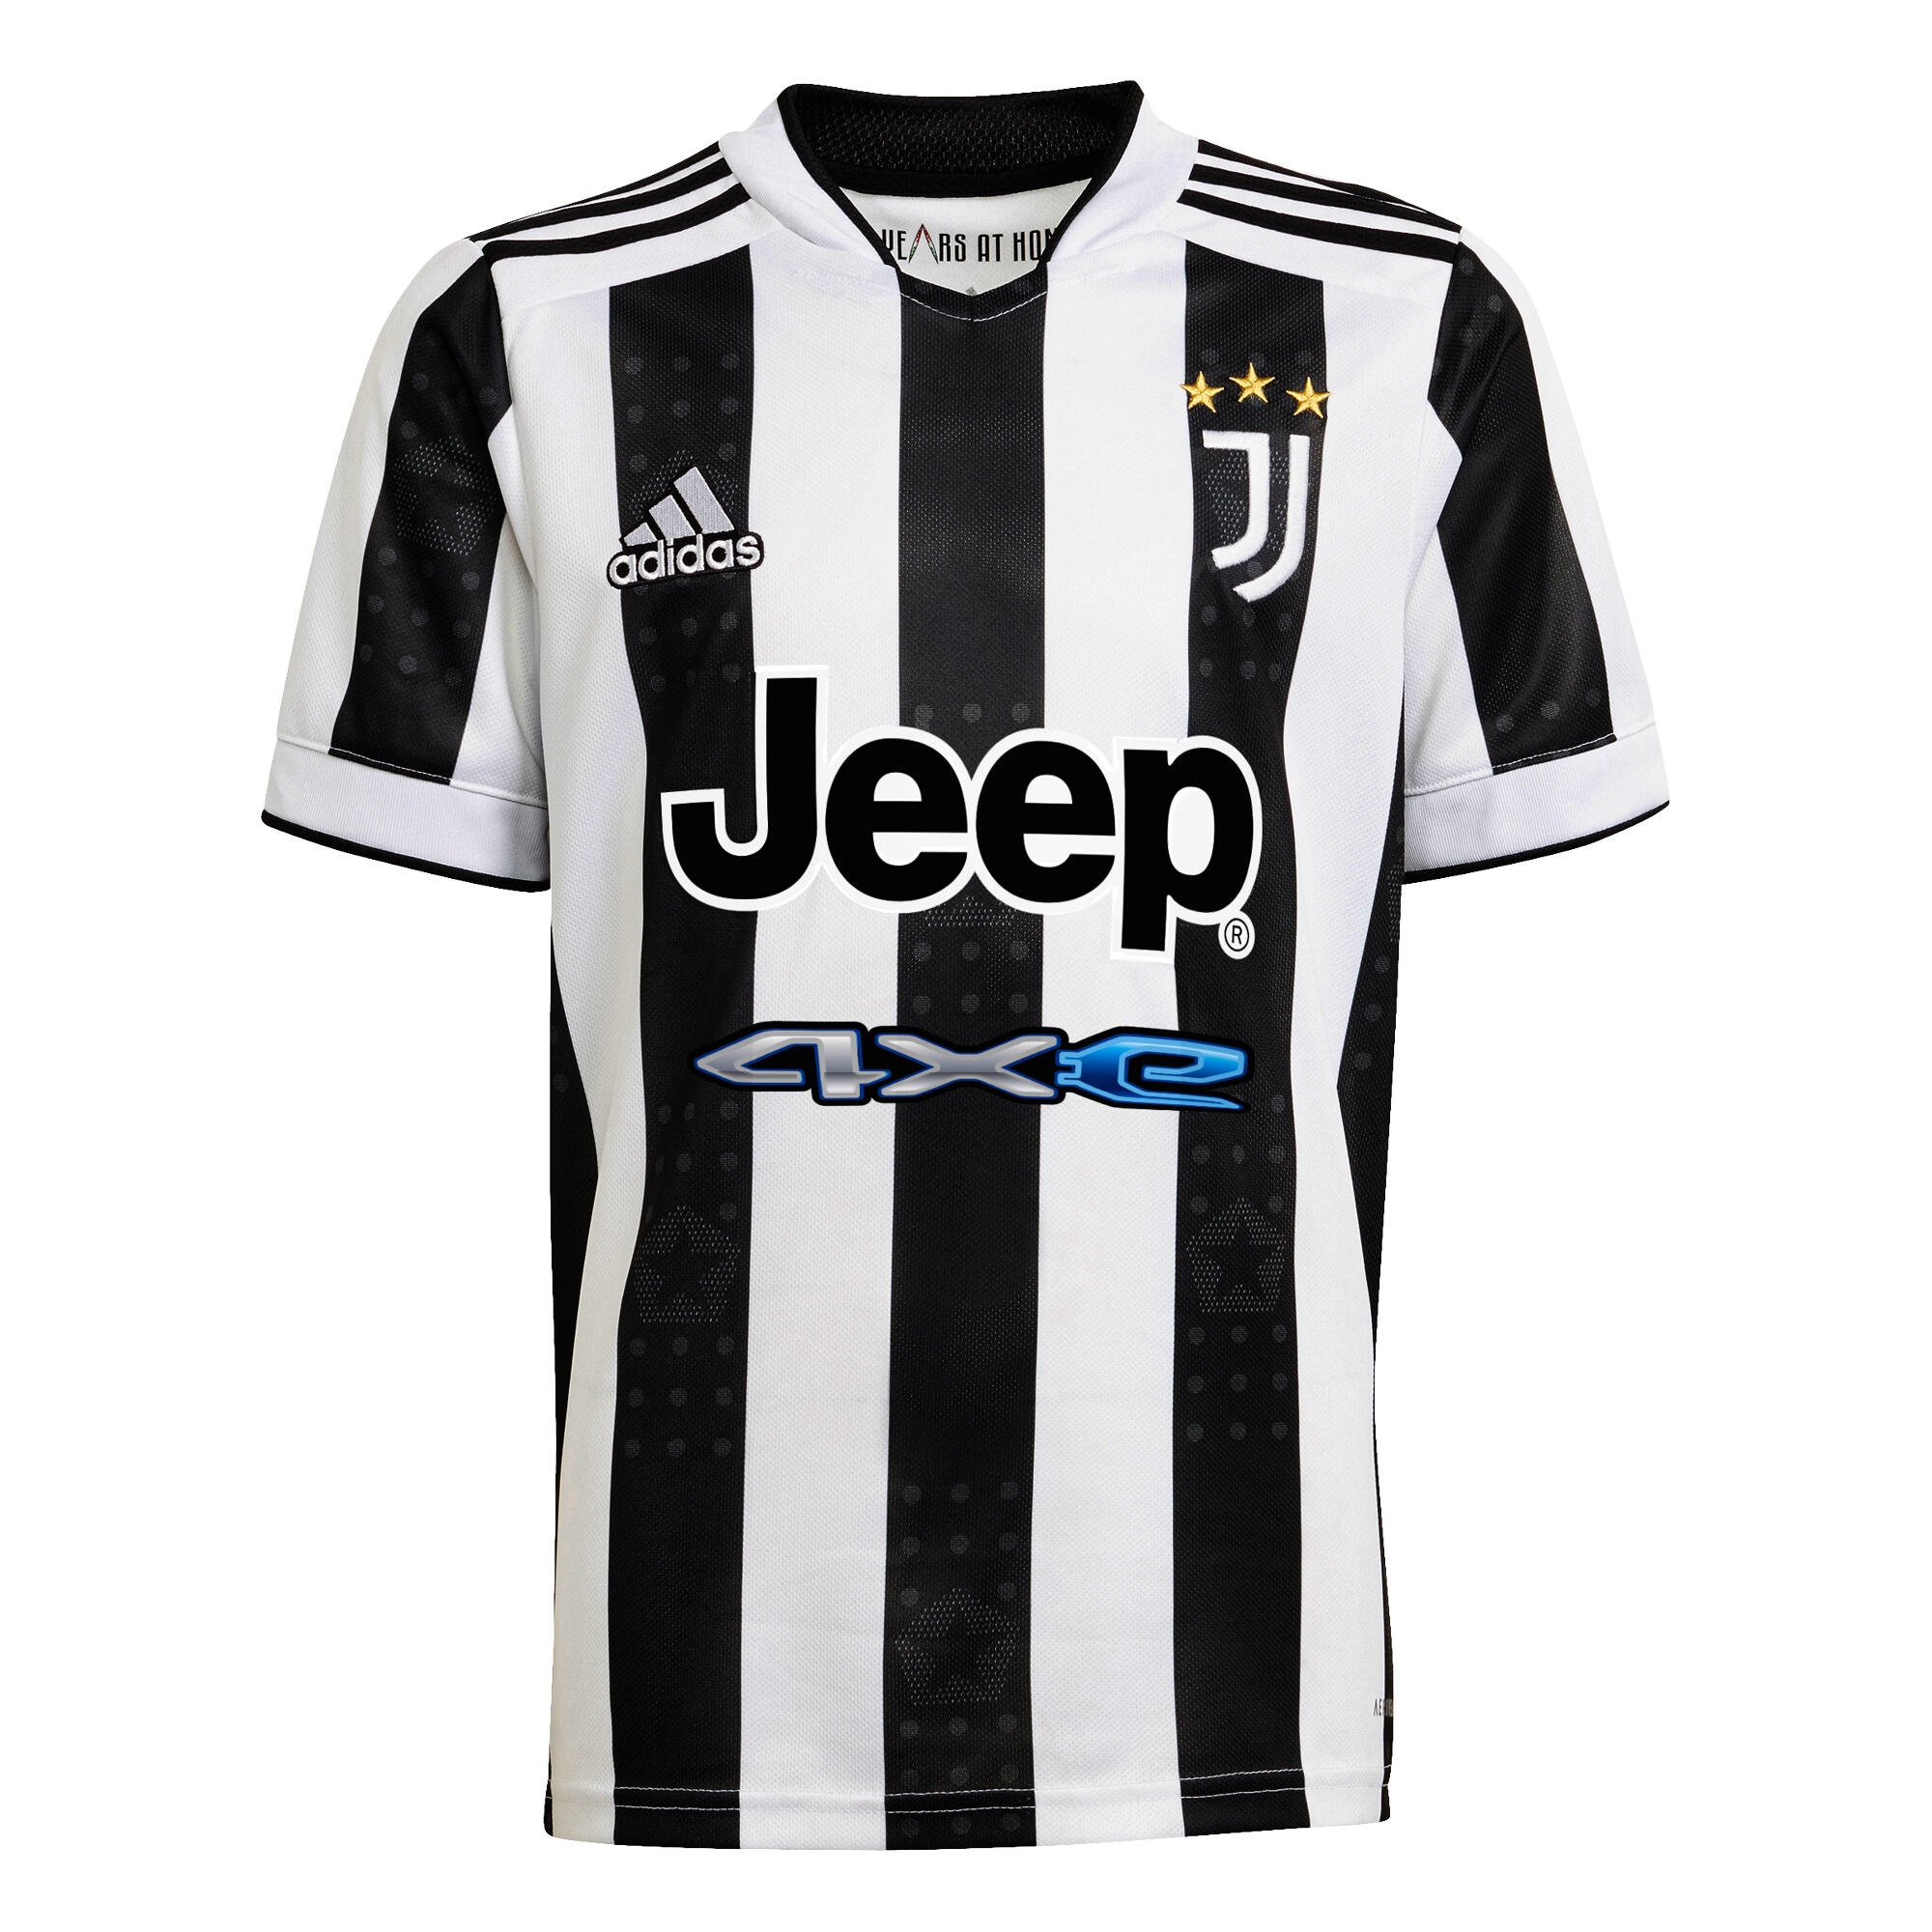 Adidas Kids' Football Shirt - Juventus Home 21/22